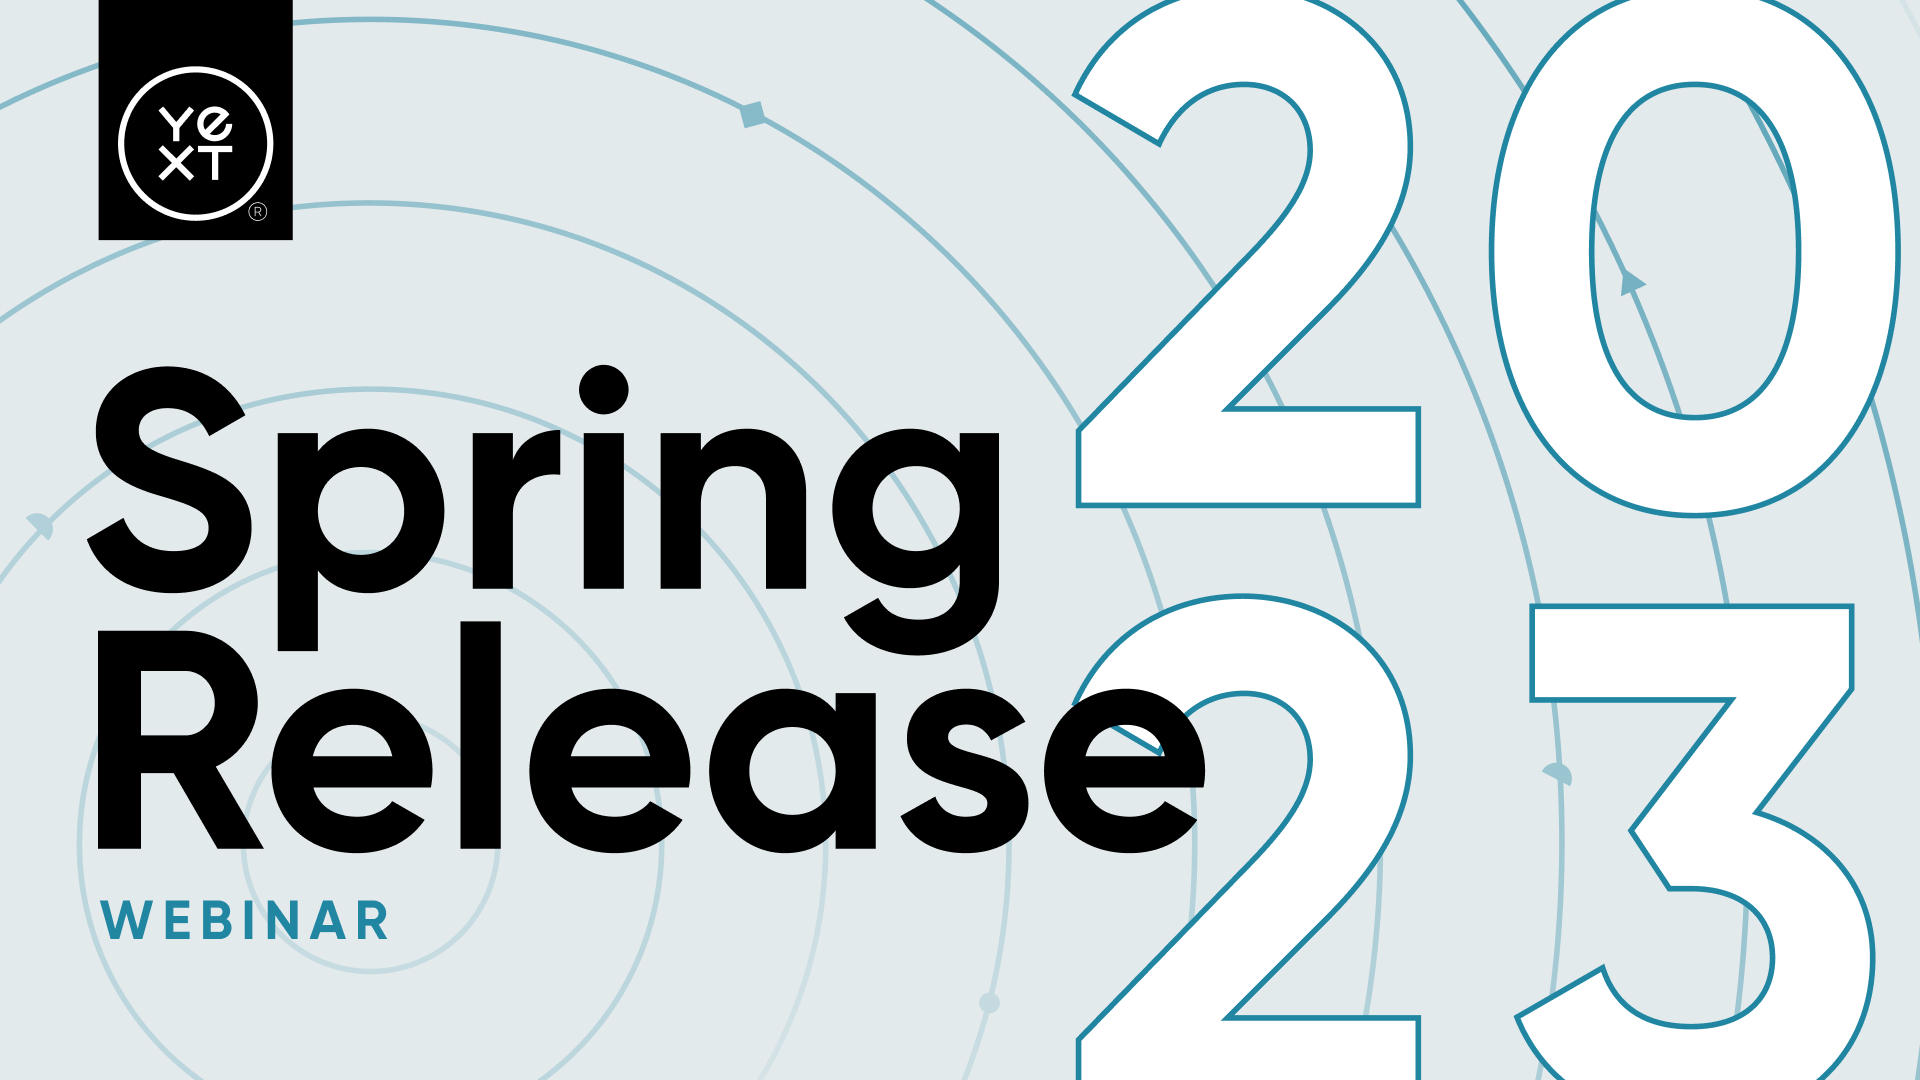 Spring Release Webinar